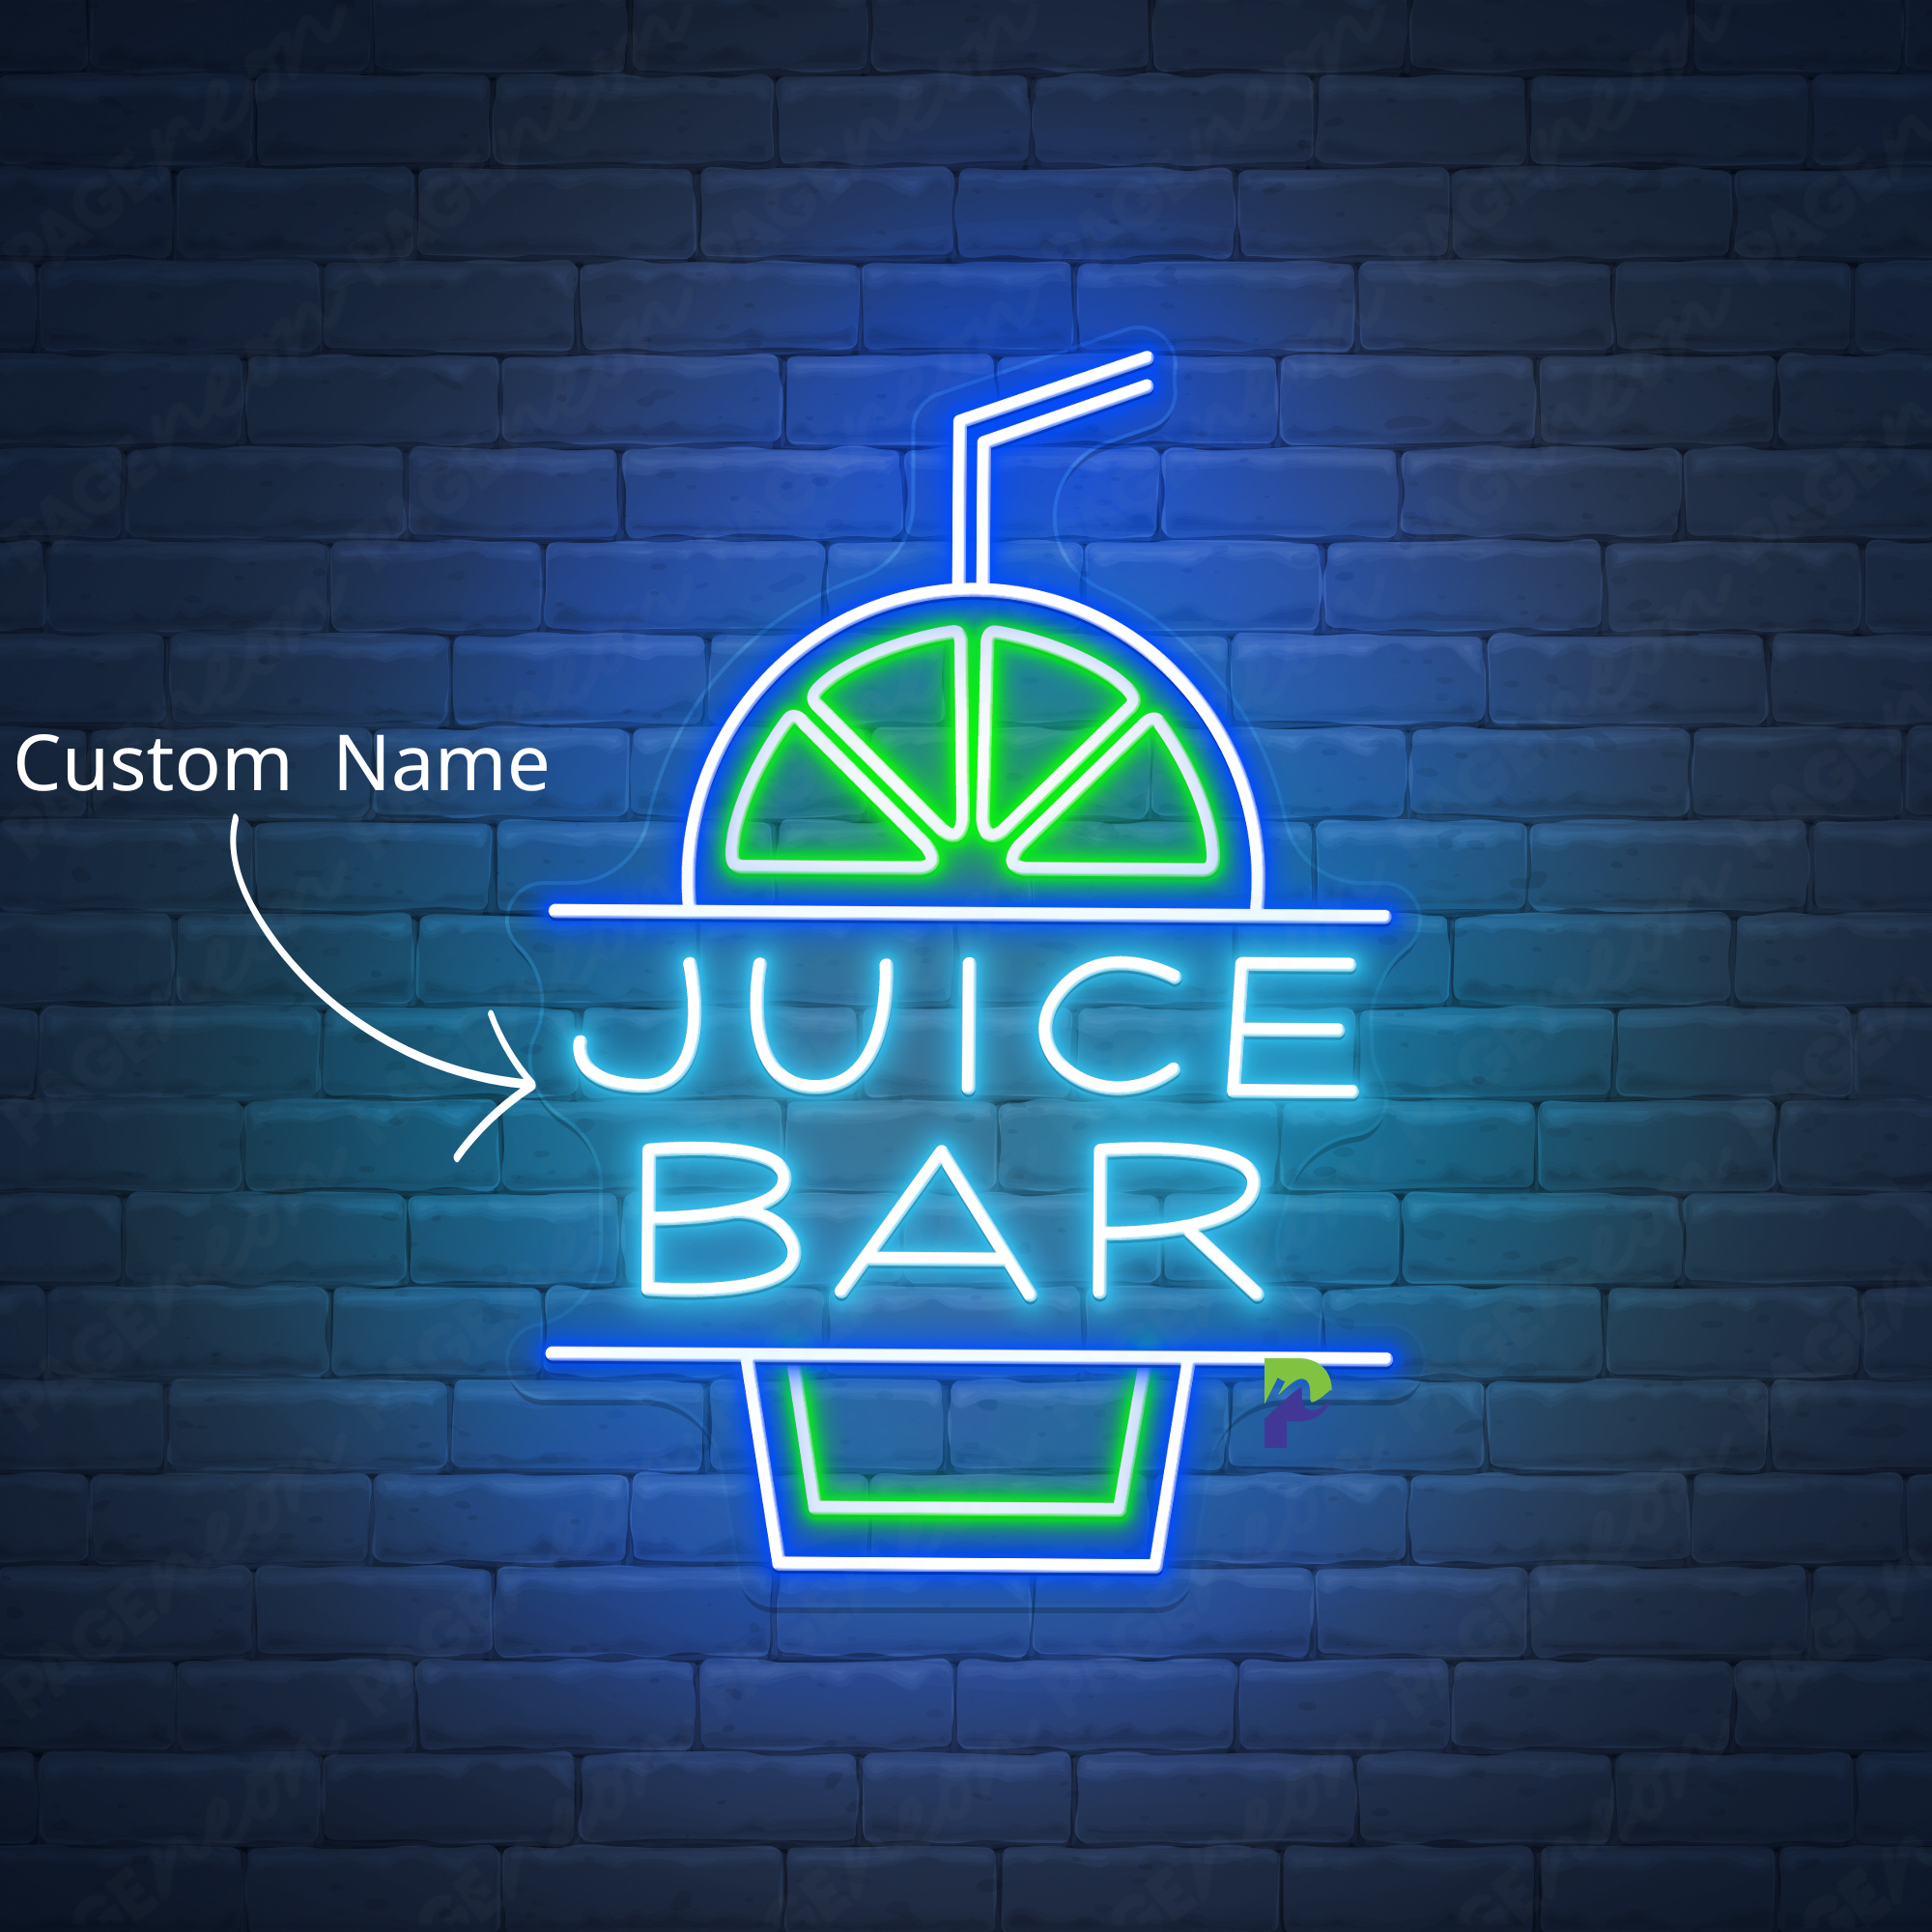 Juice Bar Neon Sign Custom Shop Name Led Light